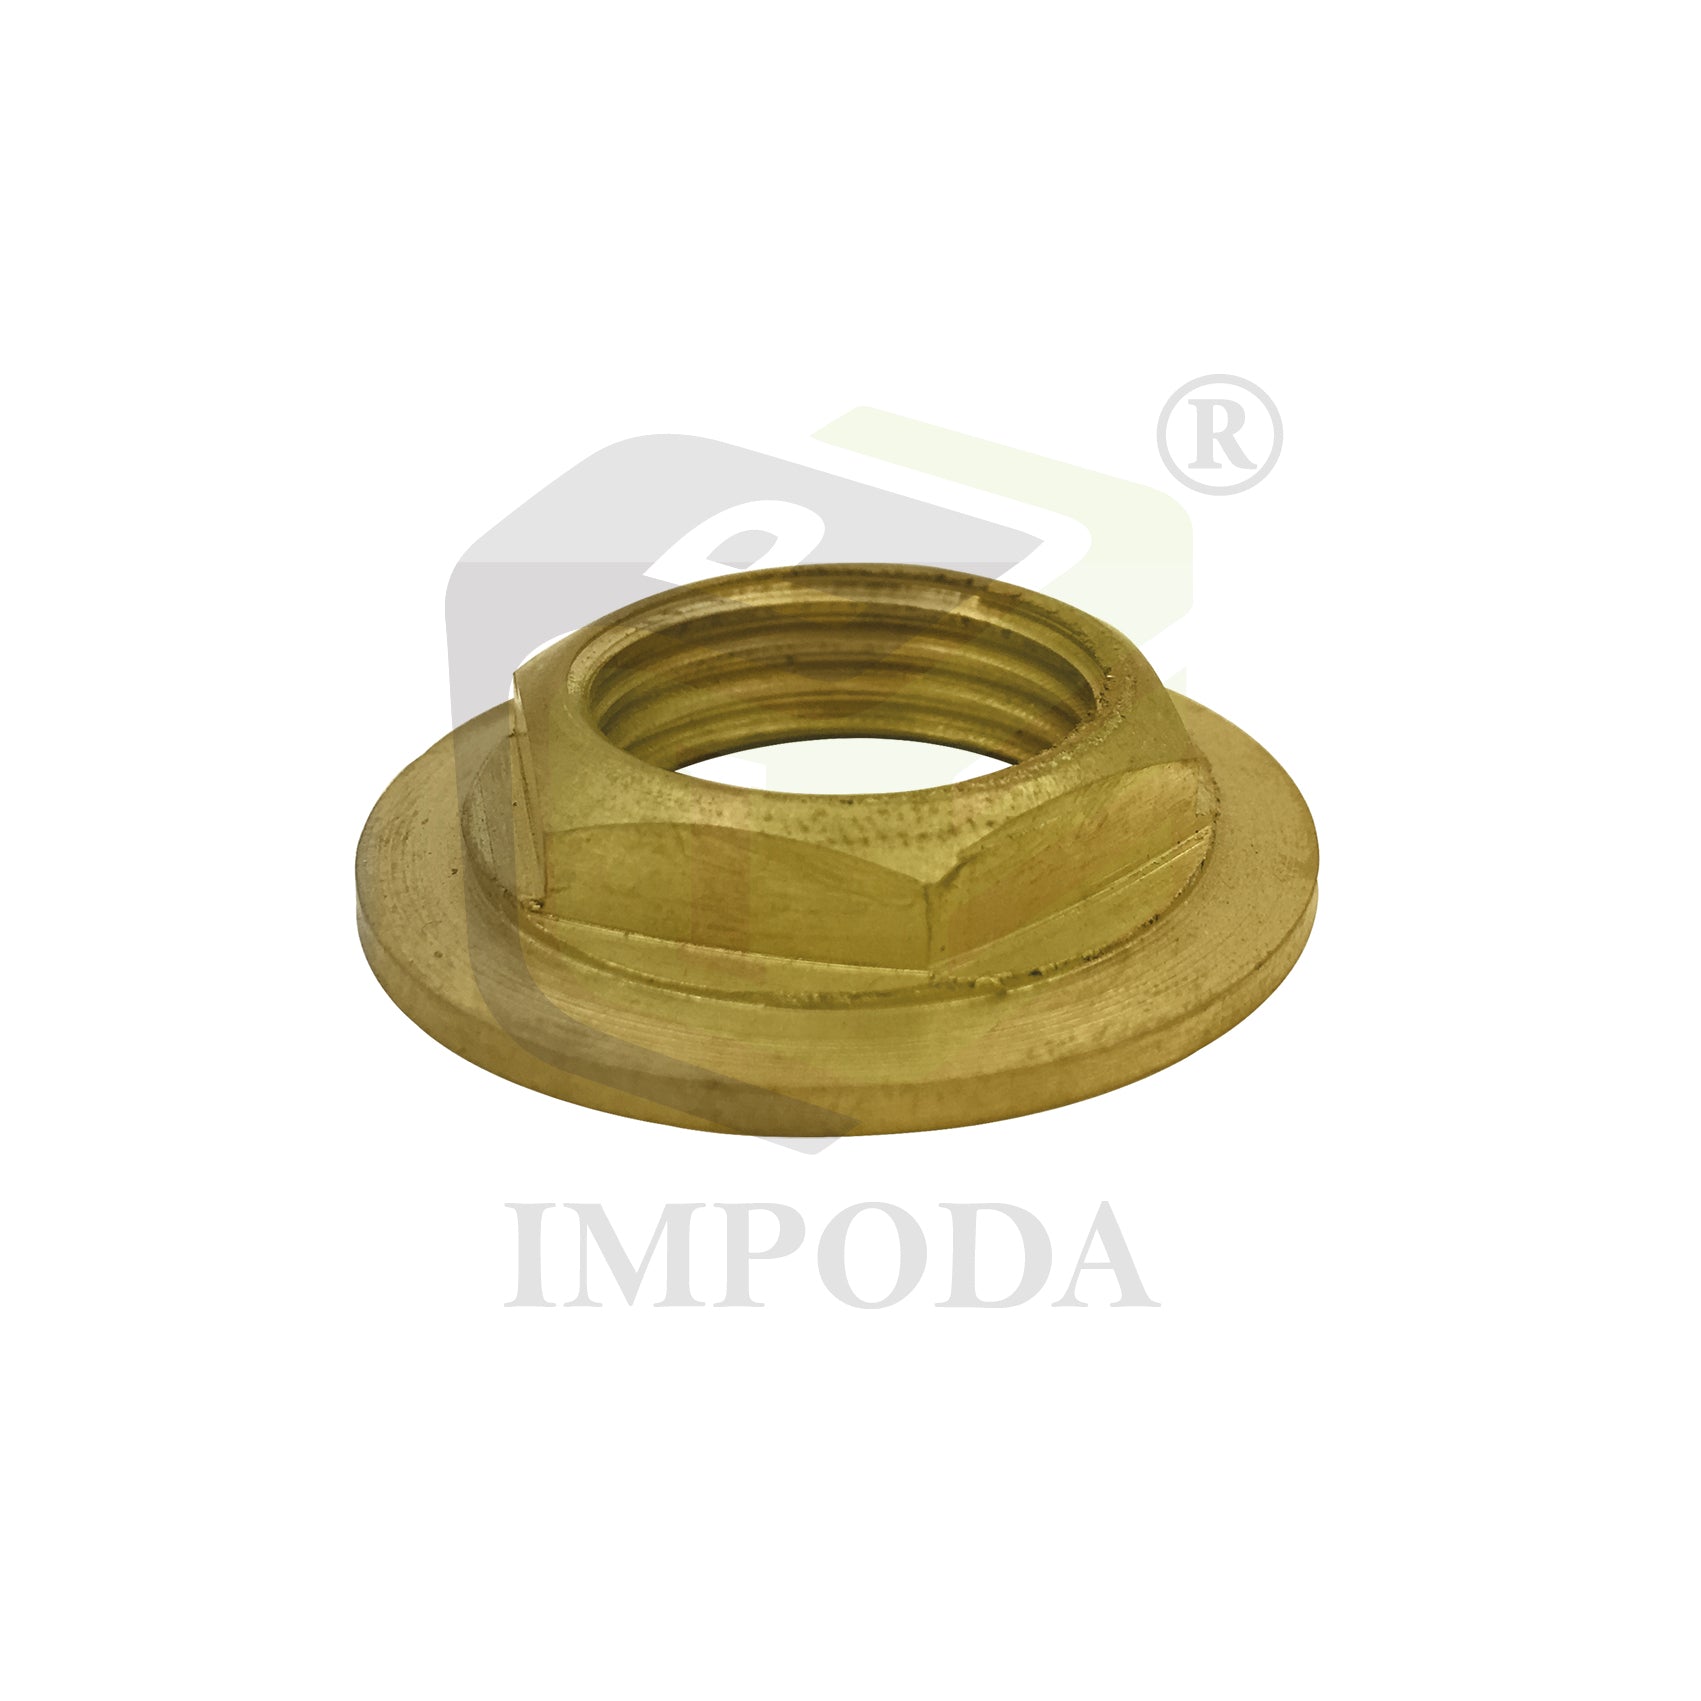 Brass Check Nut/IMP-6040